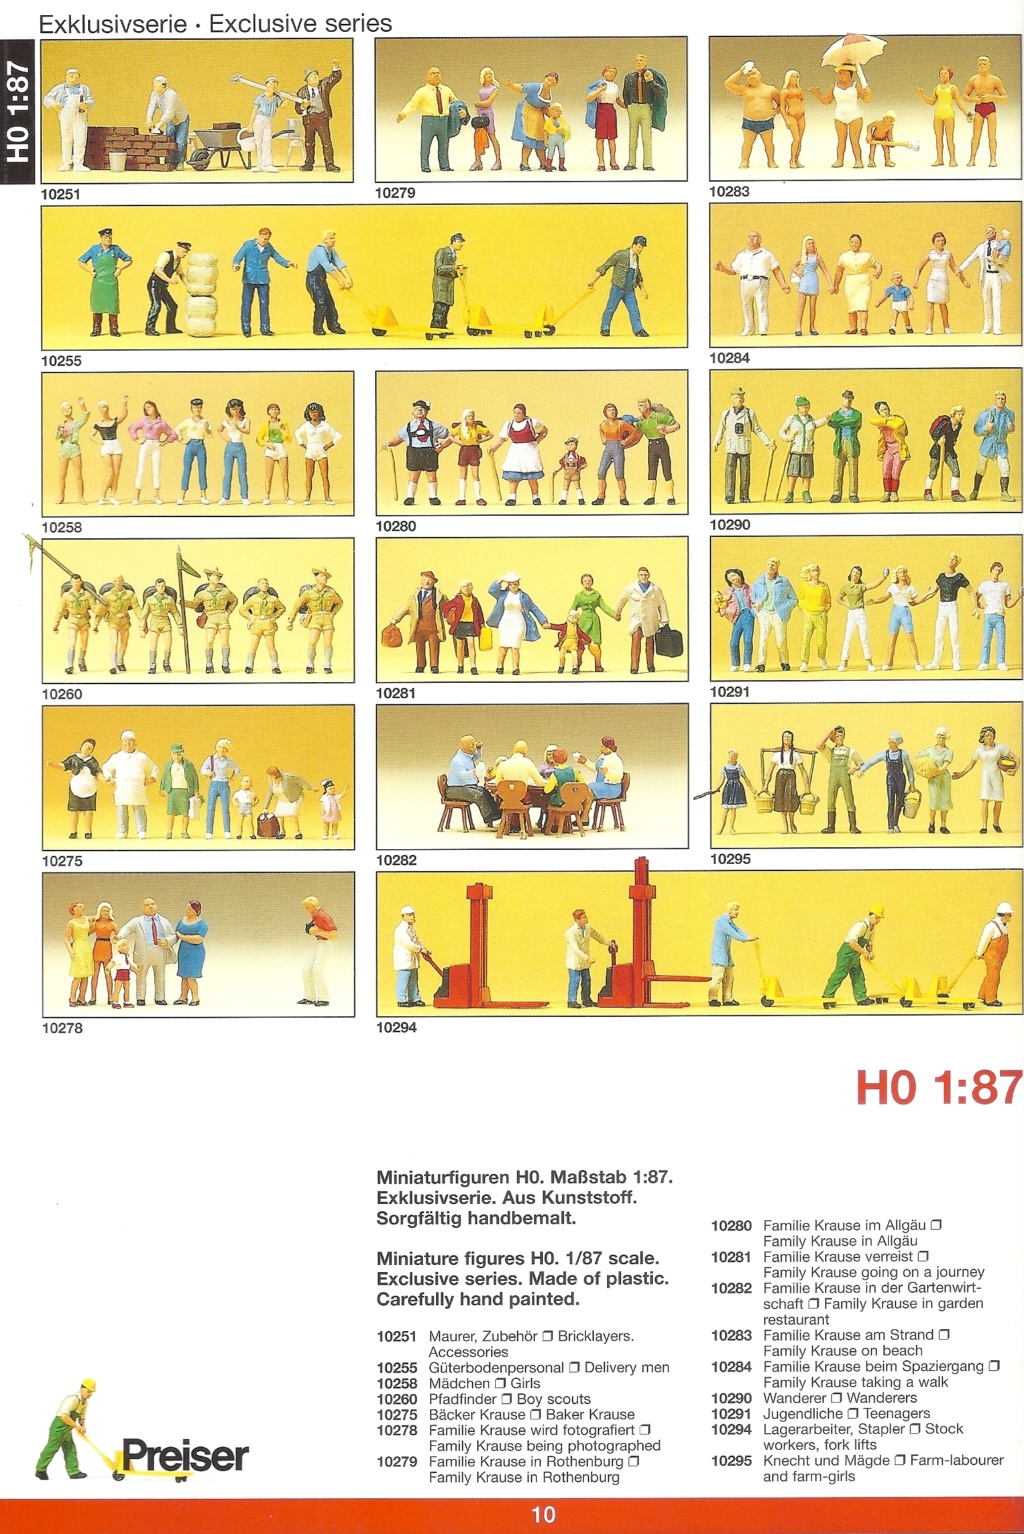 [PREISER 2007] Catalogue PK 24 2007 Preis641